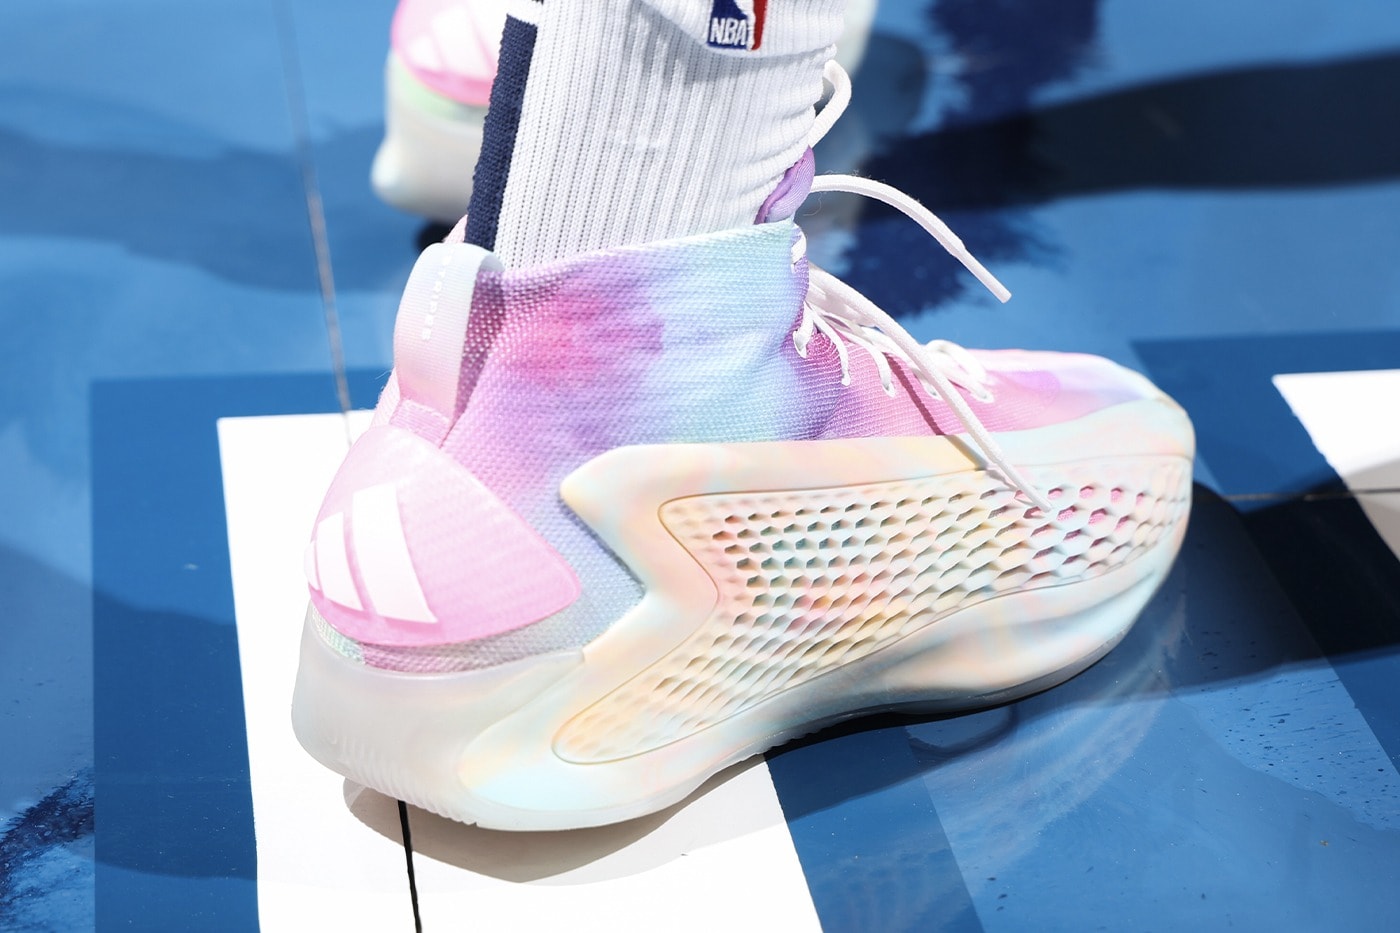 adidas AE1 全新「3Stripes Select Basketball」PE 配色率先曝光